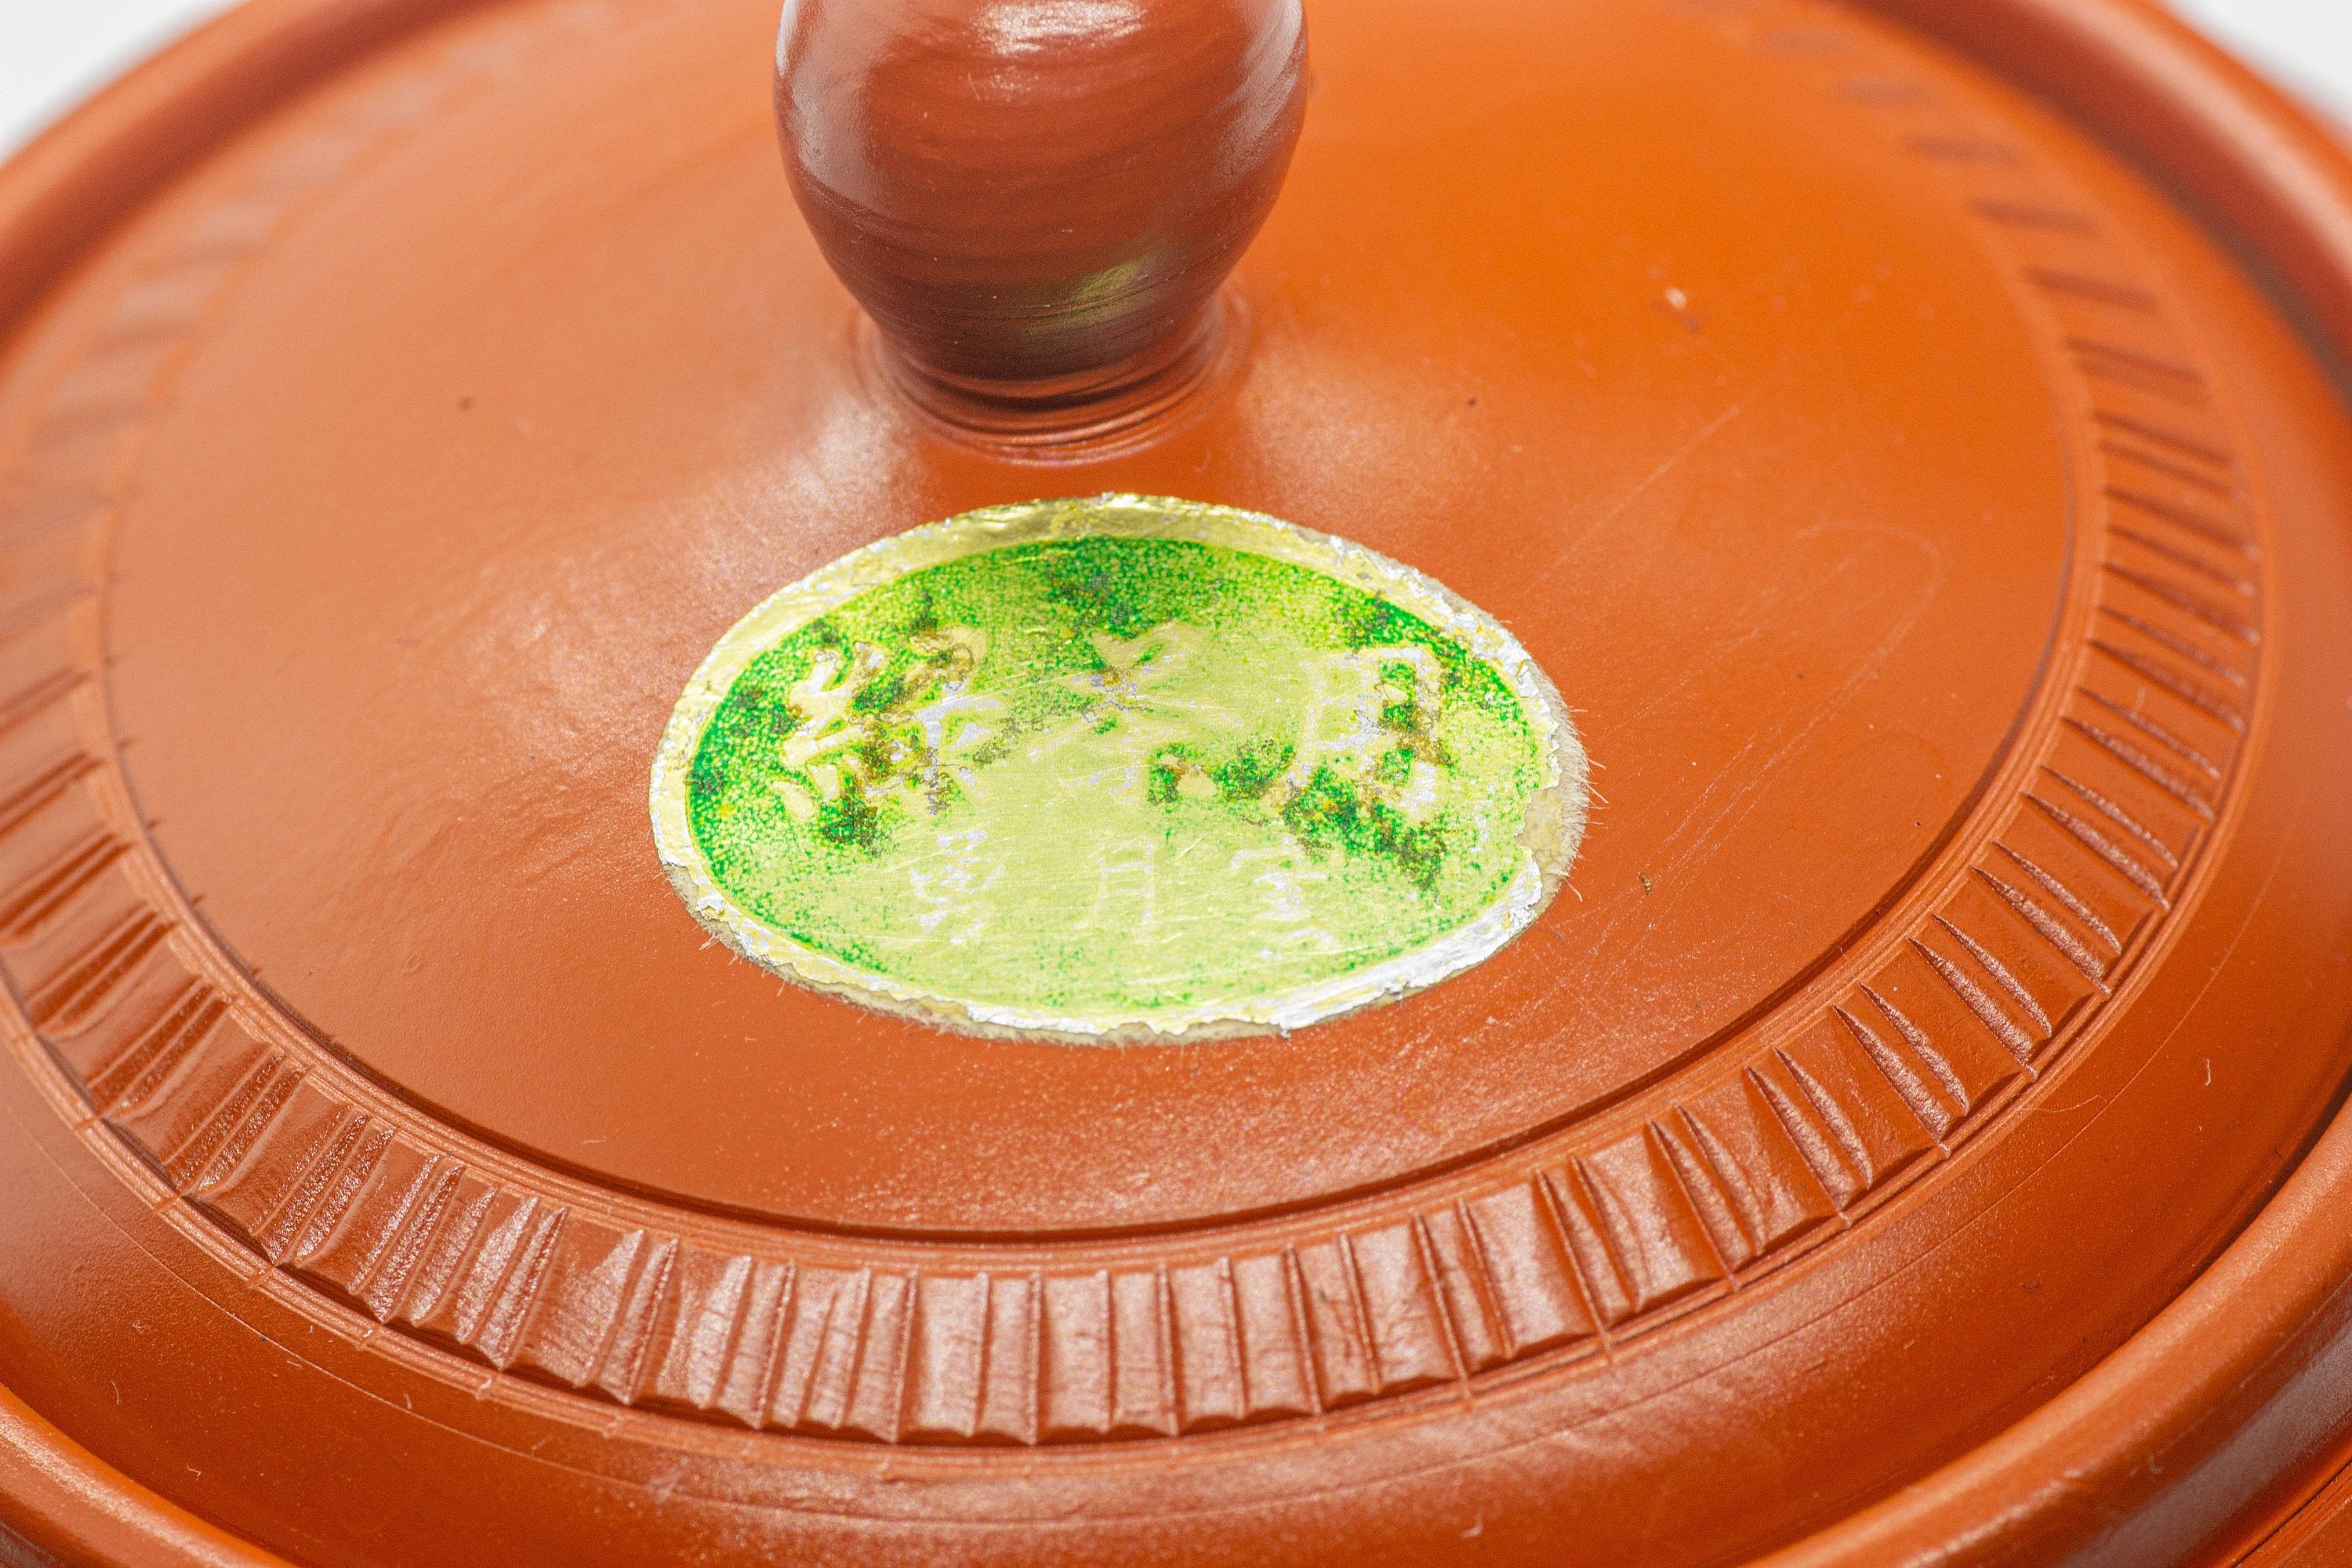 Japanese Kyusu - Wide Tokoname-yaki Ceramic Teapot with Textured Stripe - 240ml